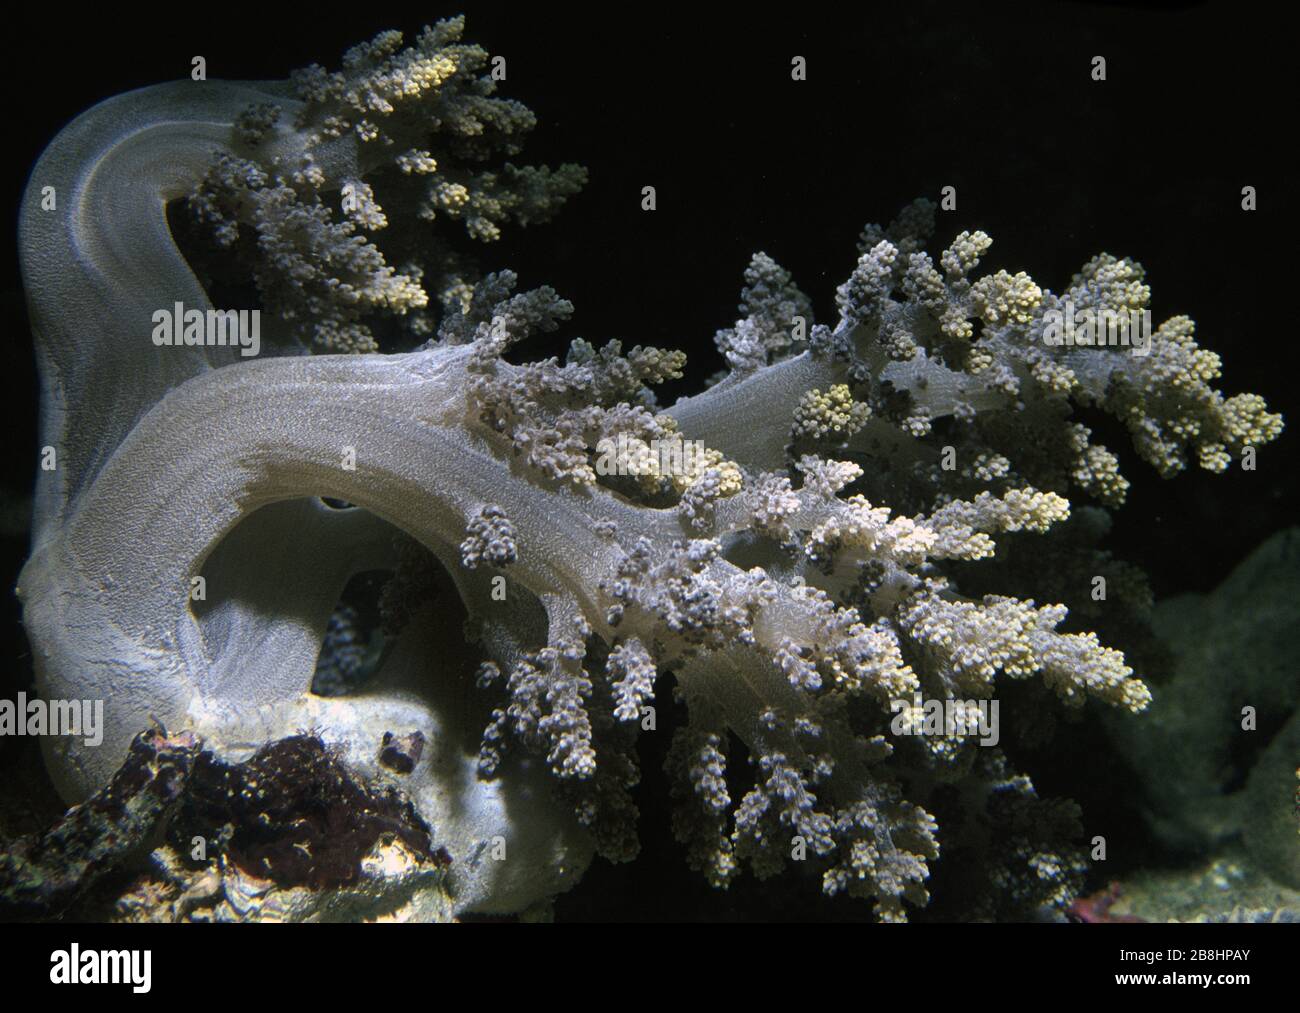 Broccoli soft coral, Litophyton sp. Stock Photo